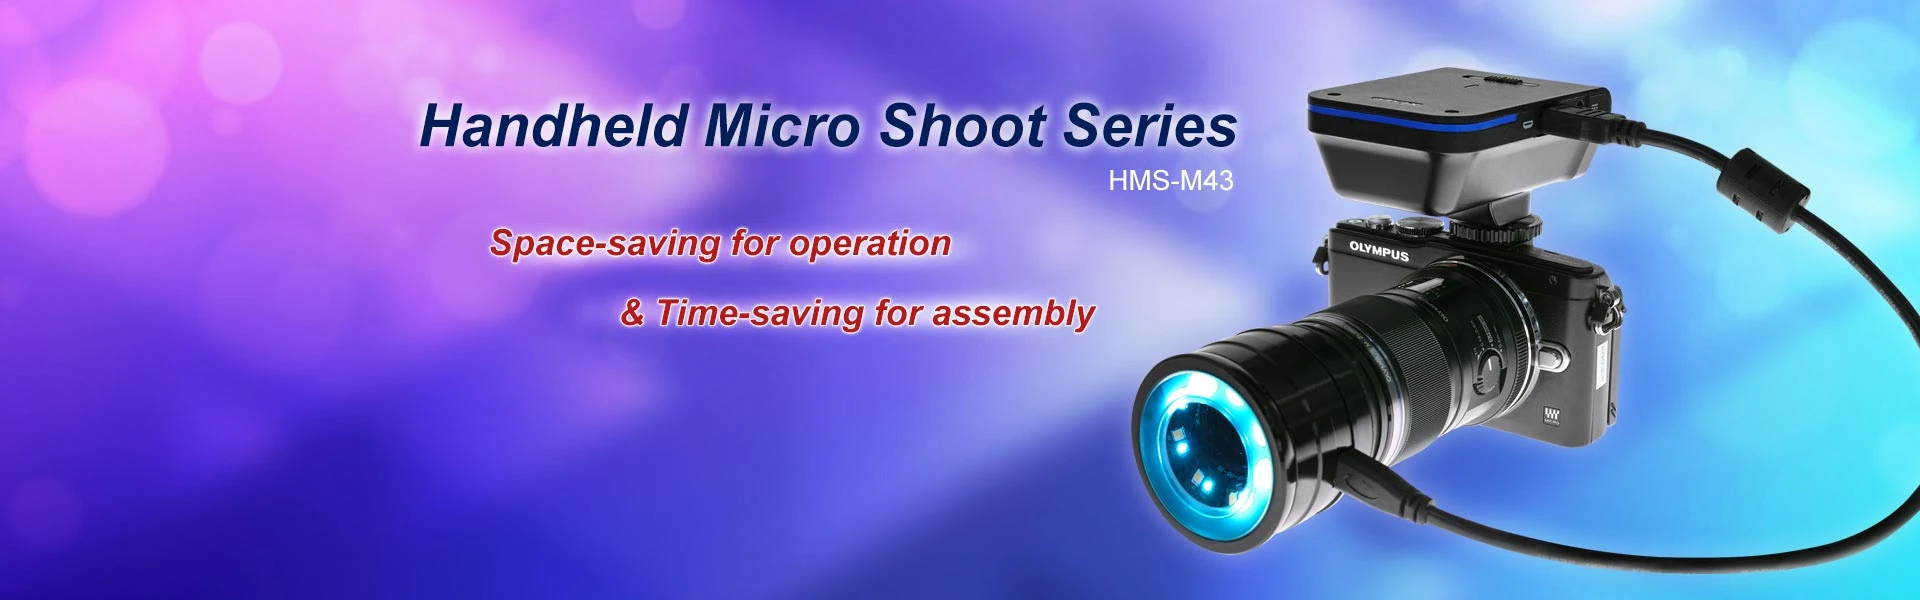 Handheld Micro Shoot Series